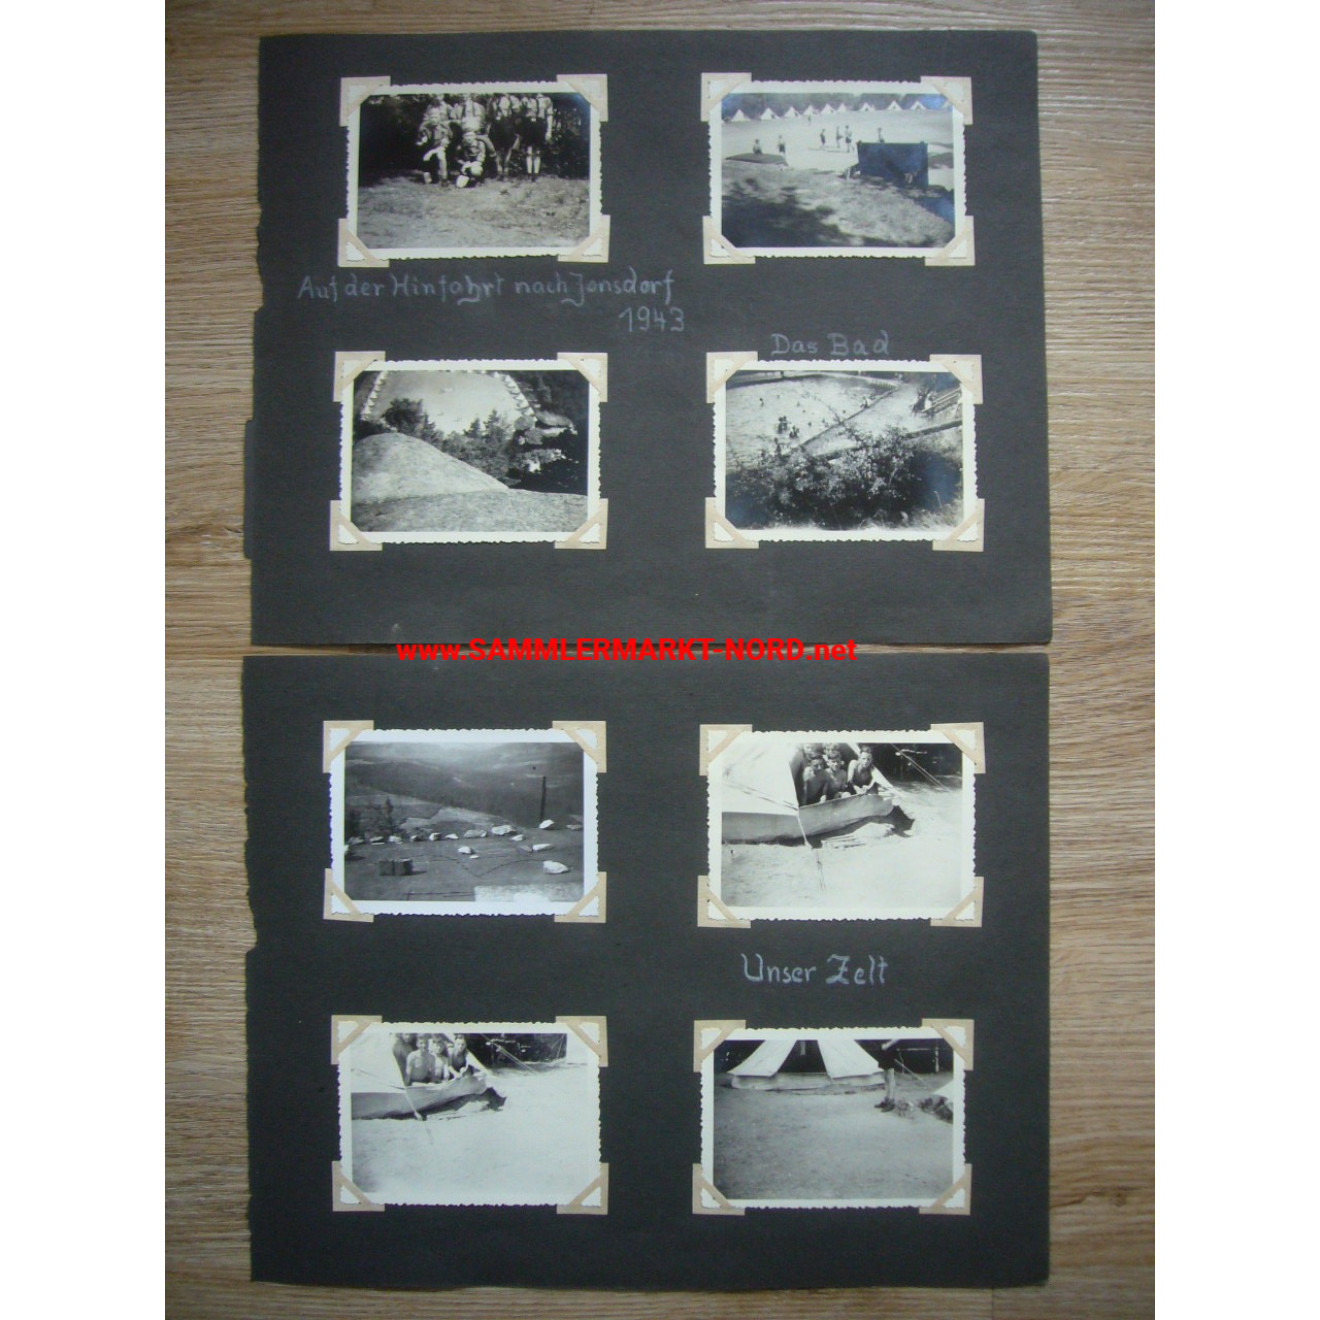 2 x album page - HJ tent camp in Jonsdorf 1943